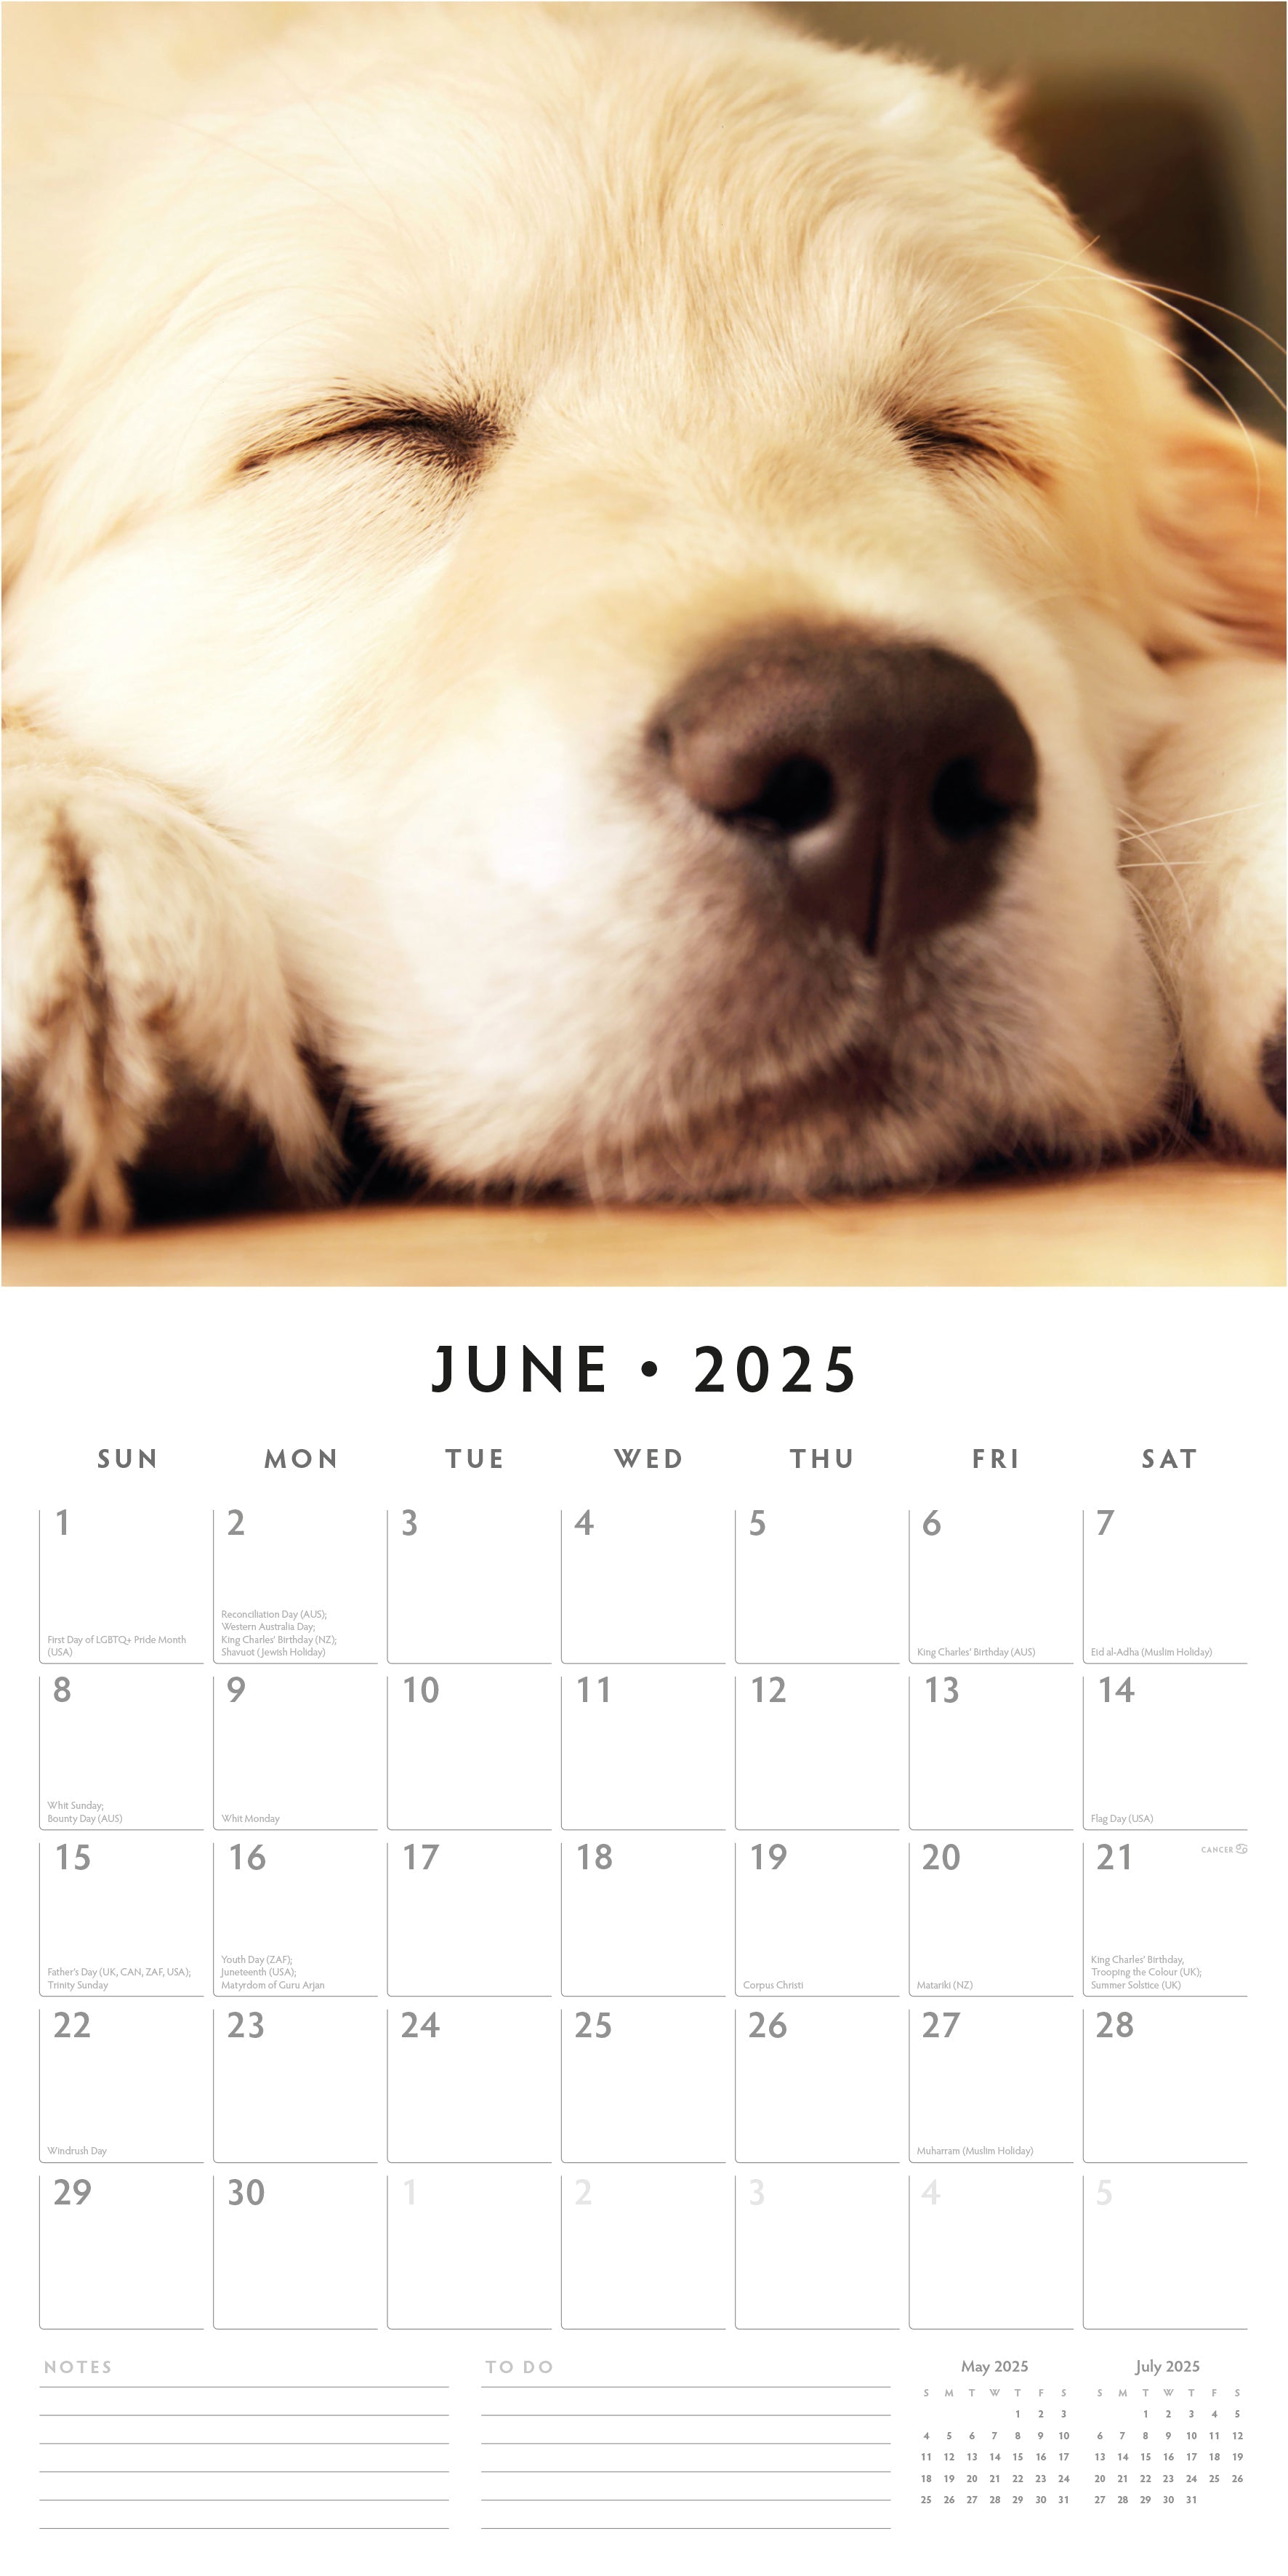 2025 Golden Retriever Puppies - Square Wall Calendar